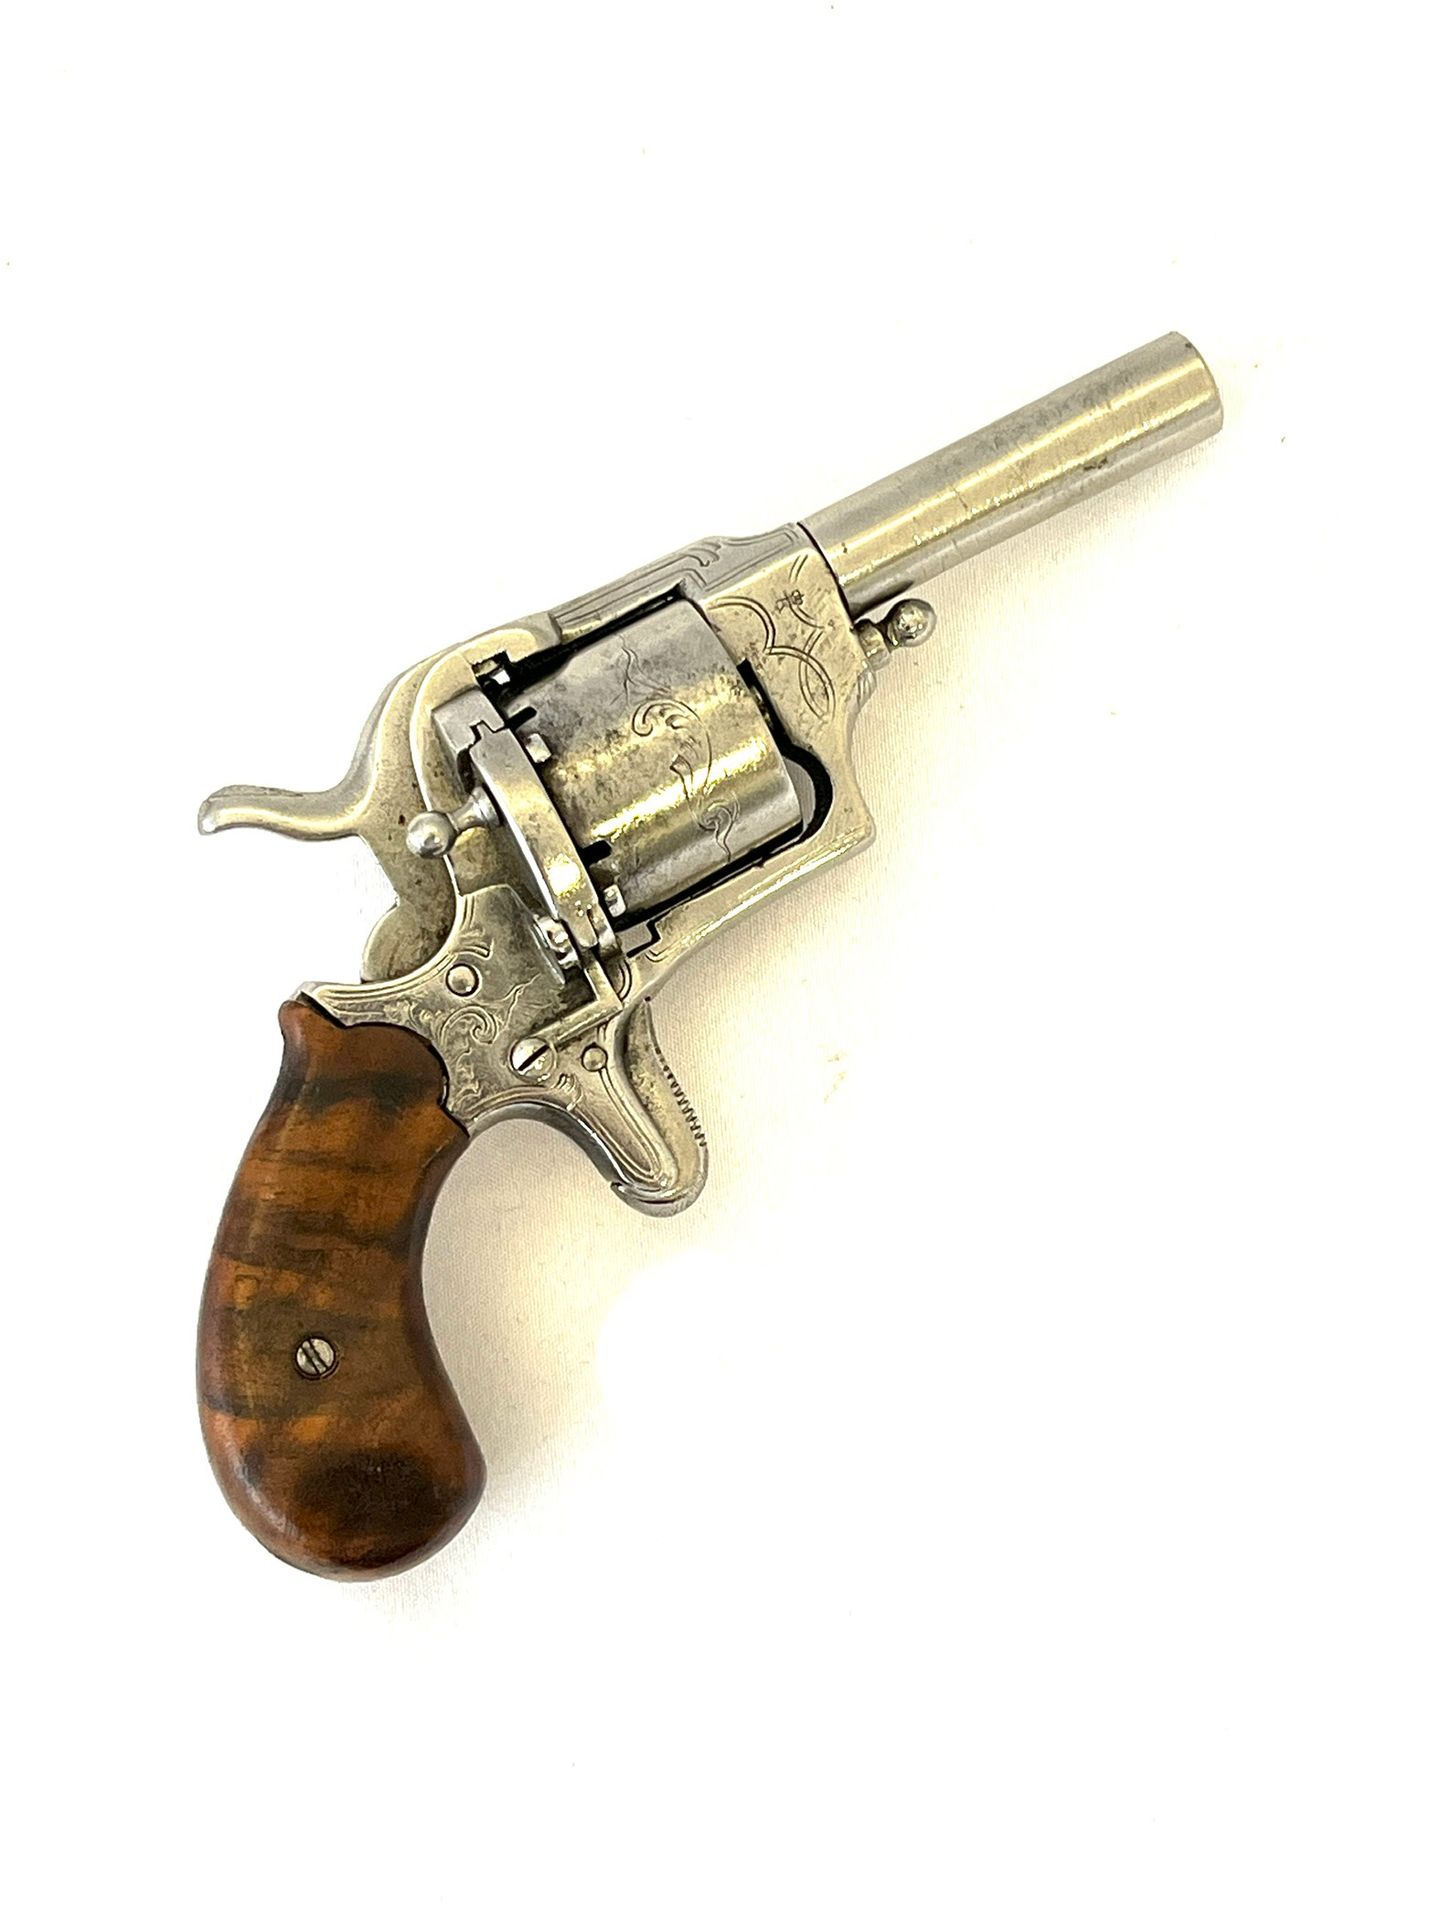 Null Pinfire Revolver

pocket model

7 mm caliber, round barrel of 65 mm, cylind&hellip;